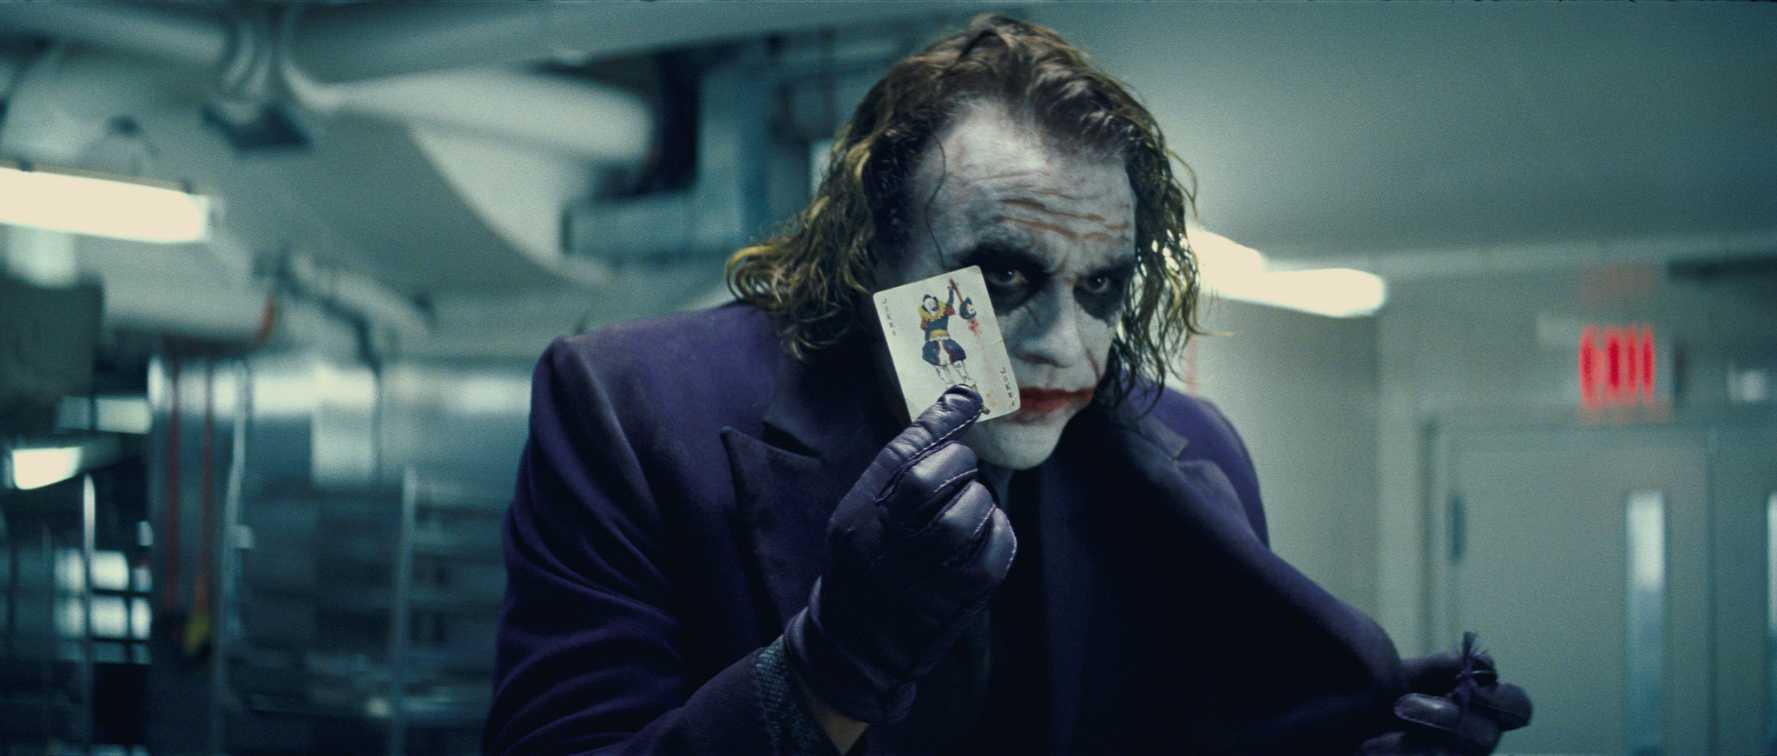 Heath Ledger iconicized The Joker in The Dark Knight